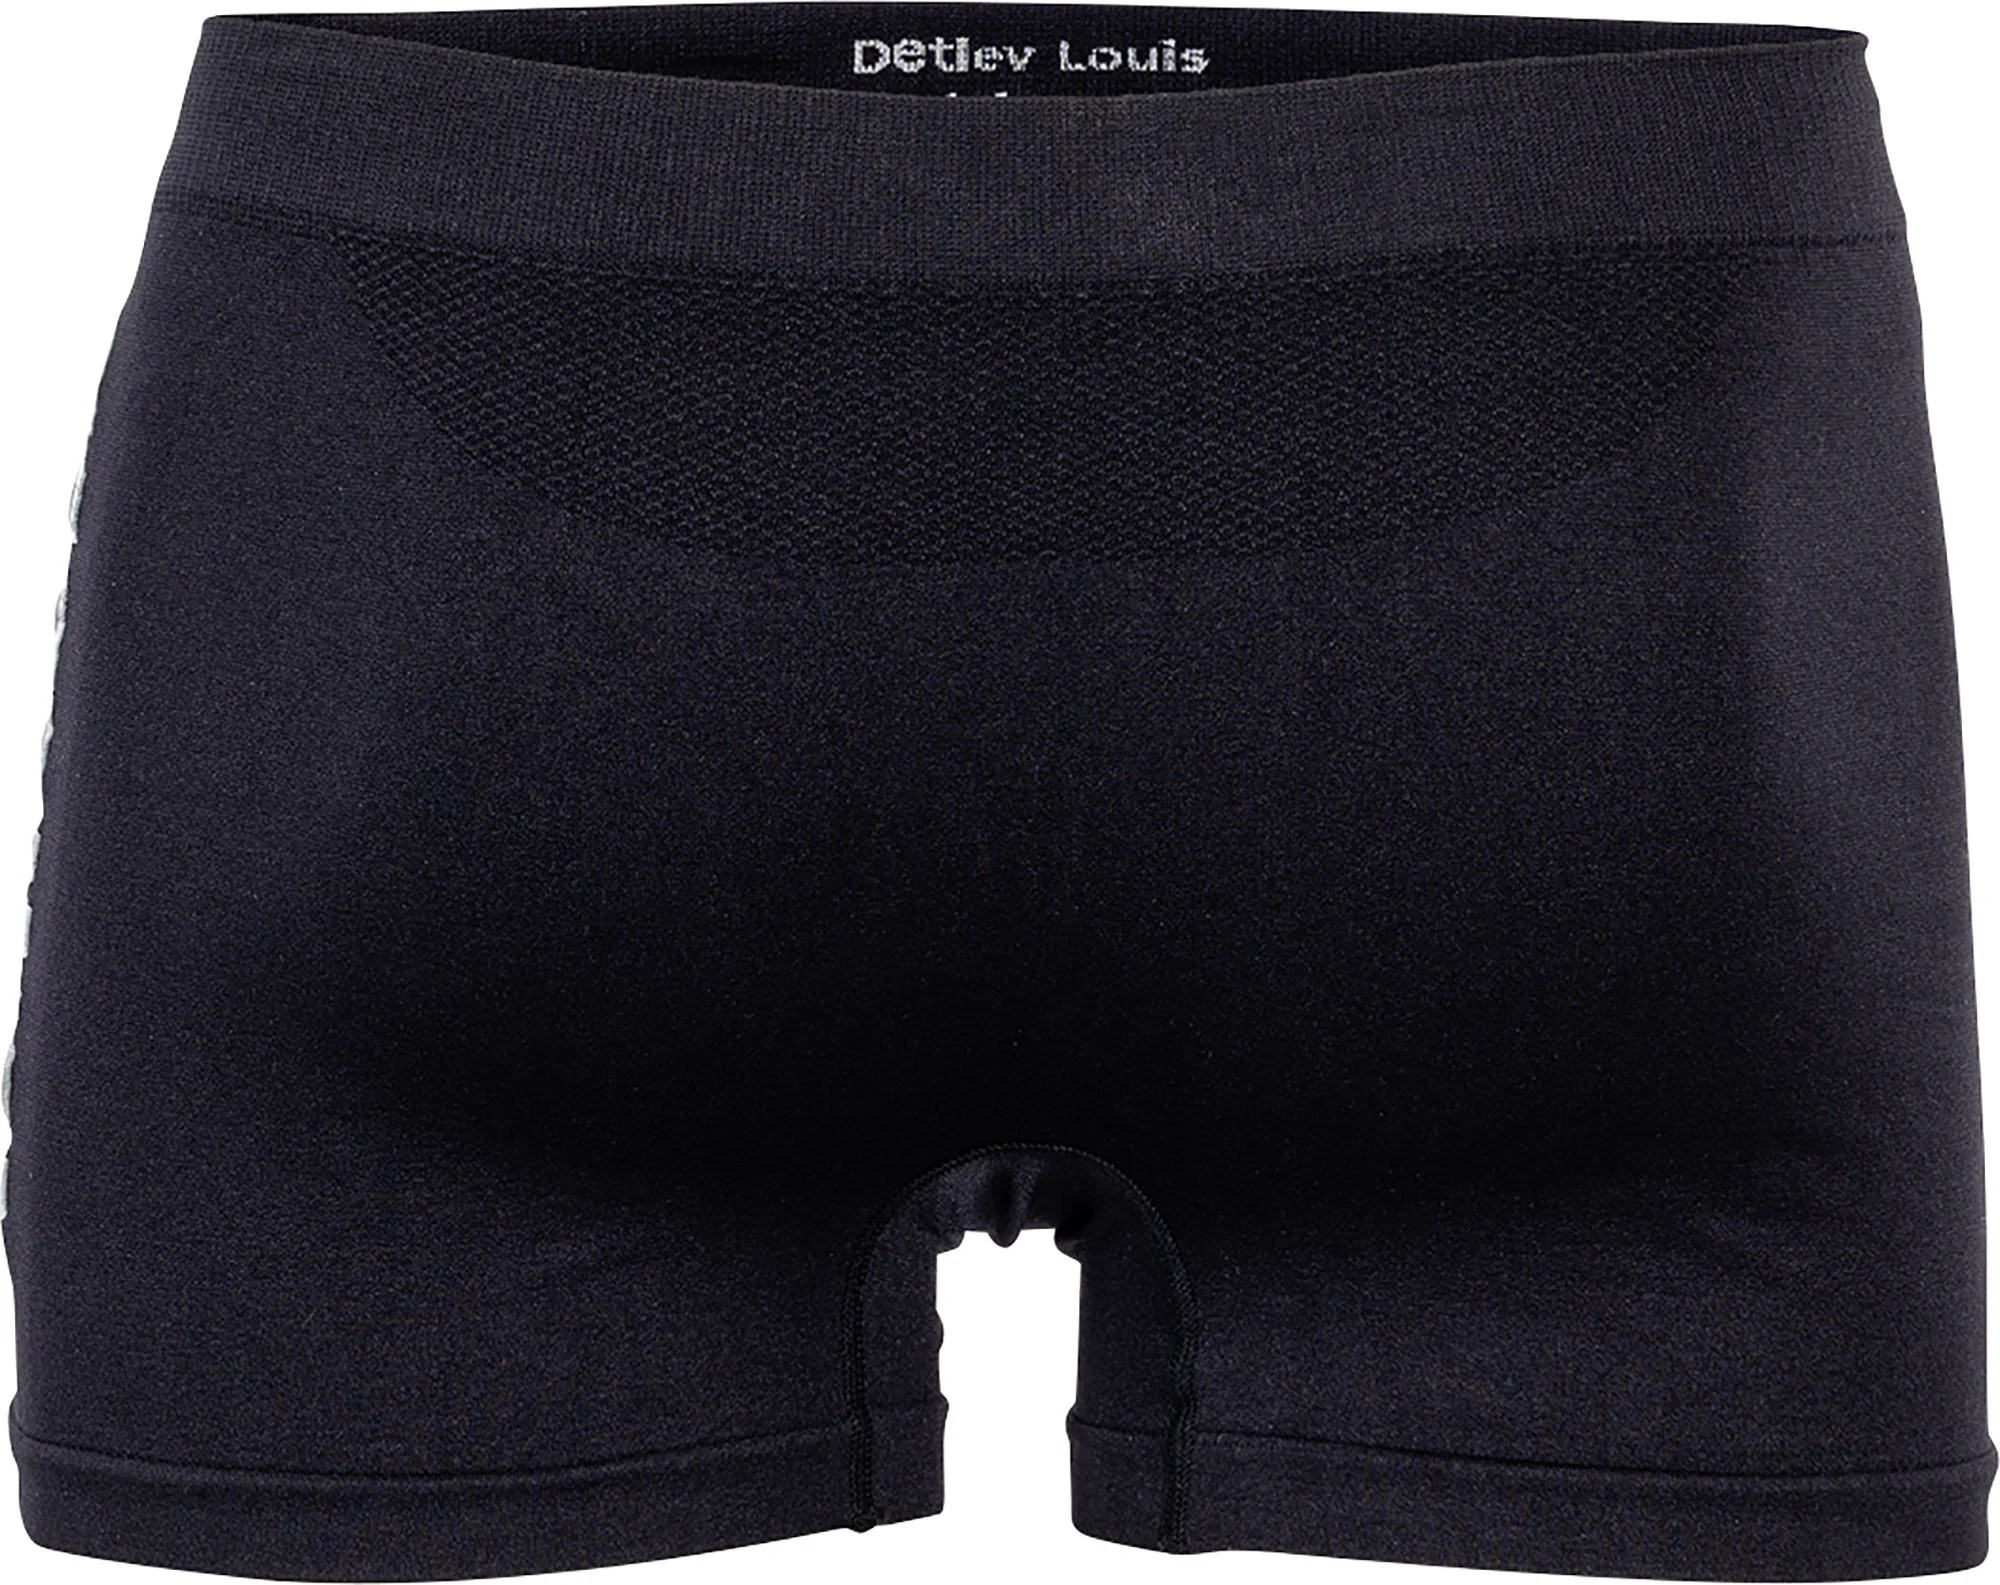 Dice Underwear Set Tank Top & Boxer Plain For Men @ Best Price Online